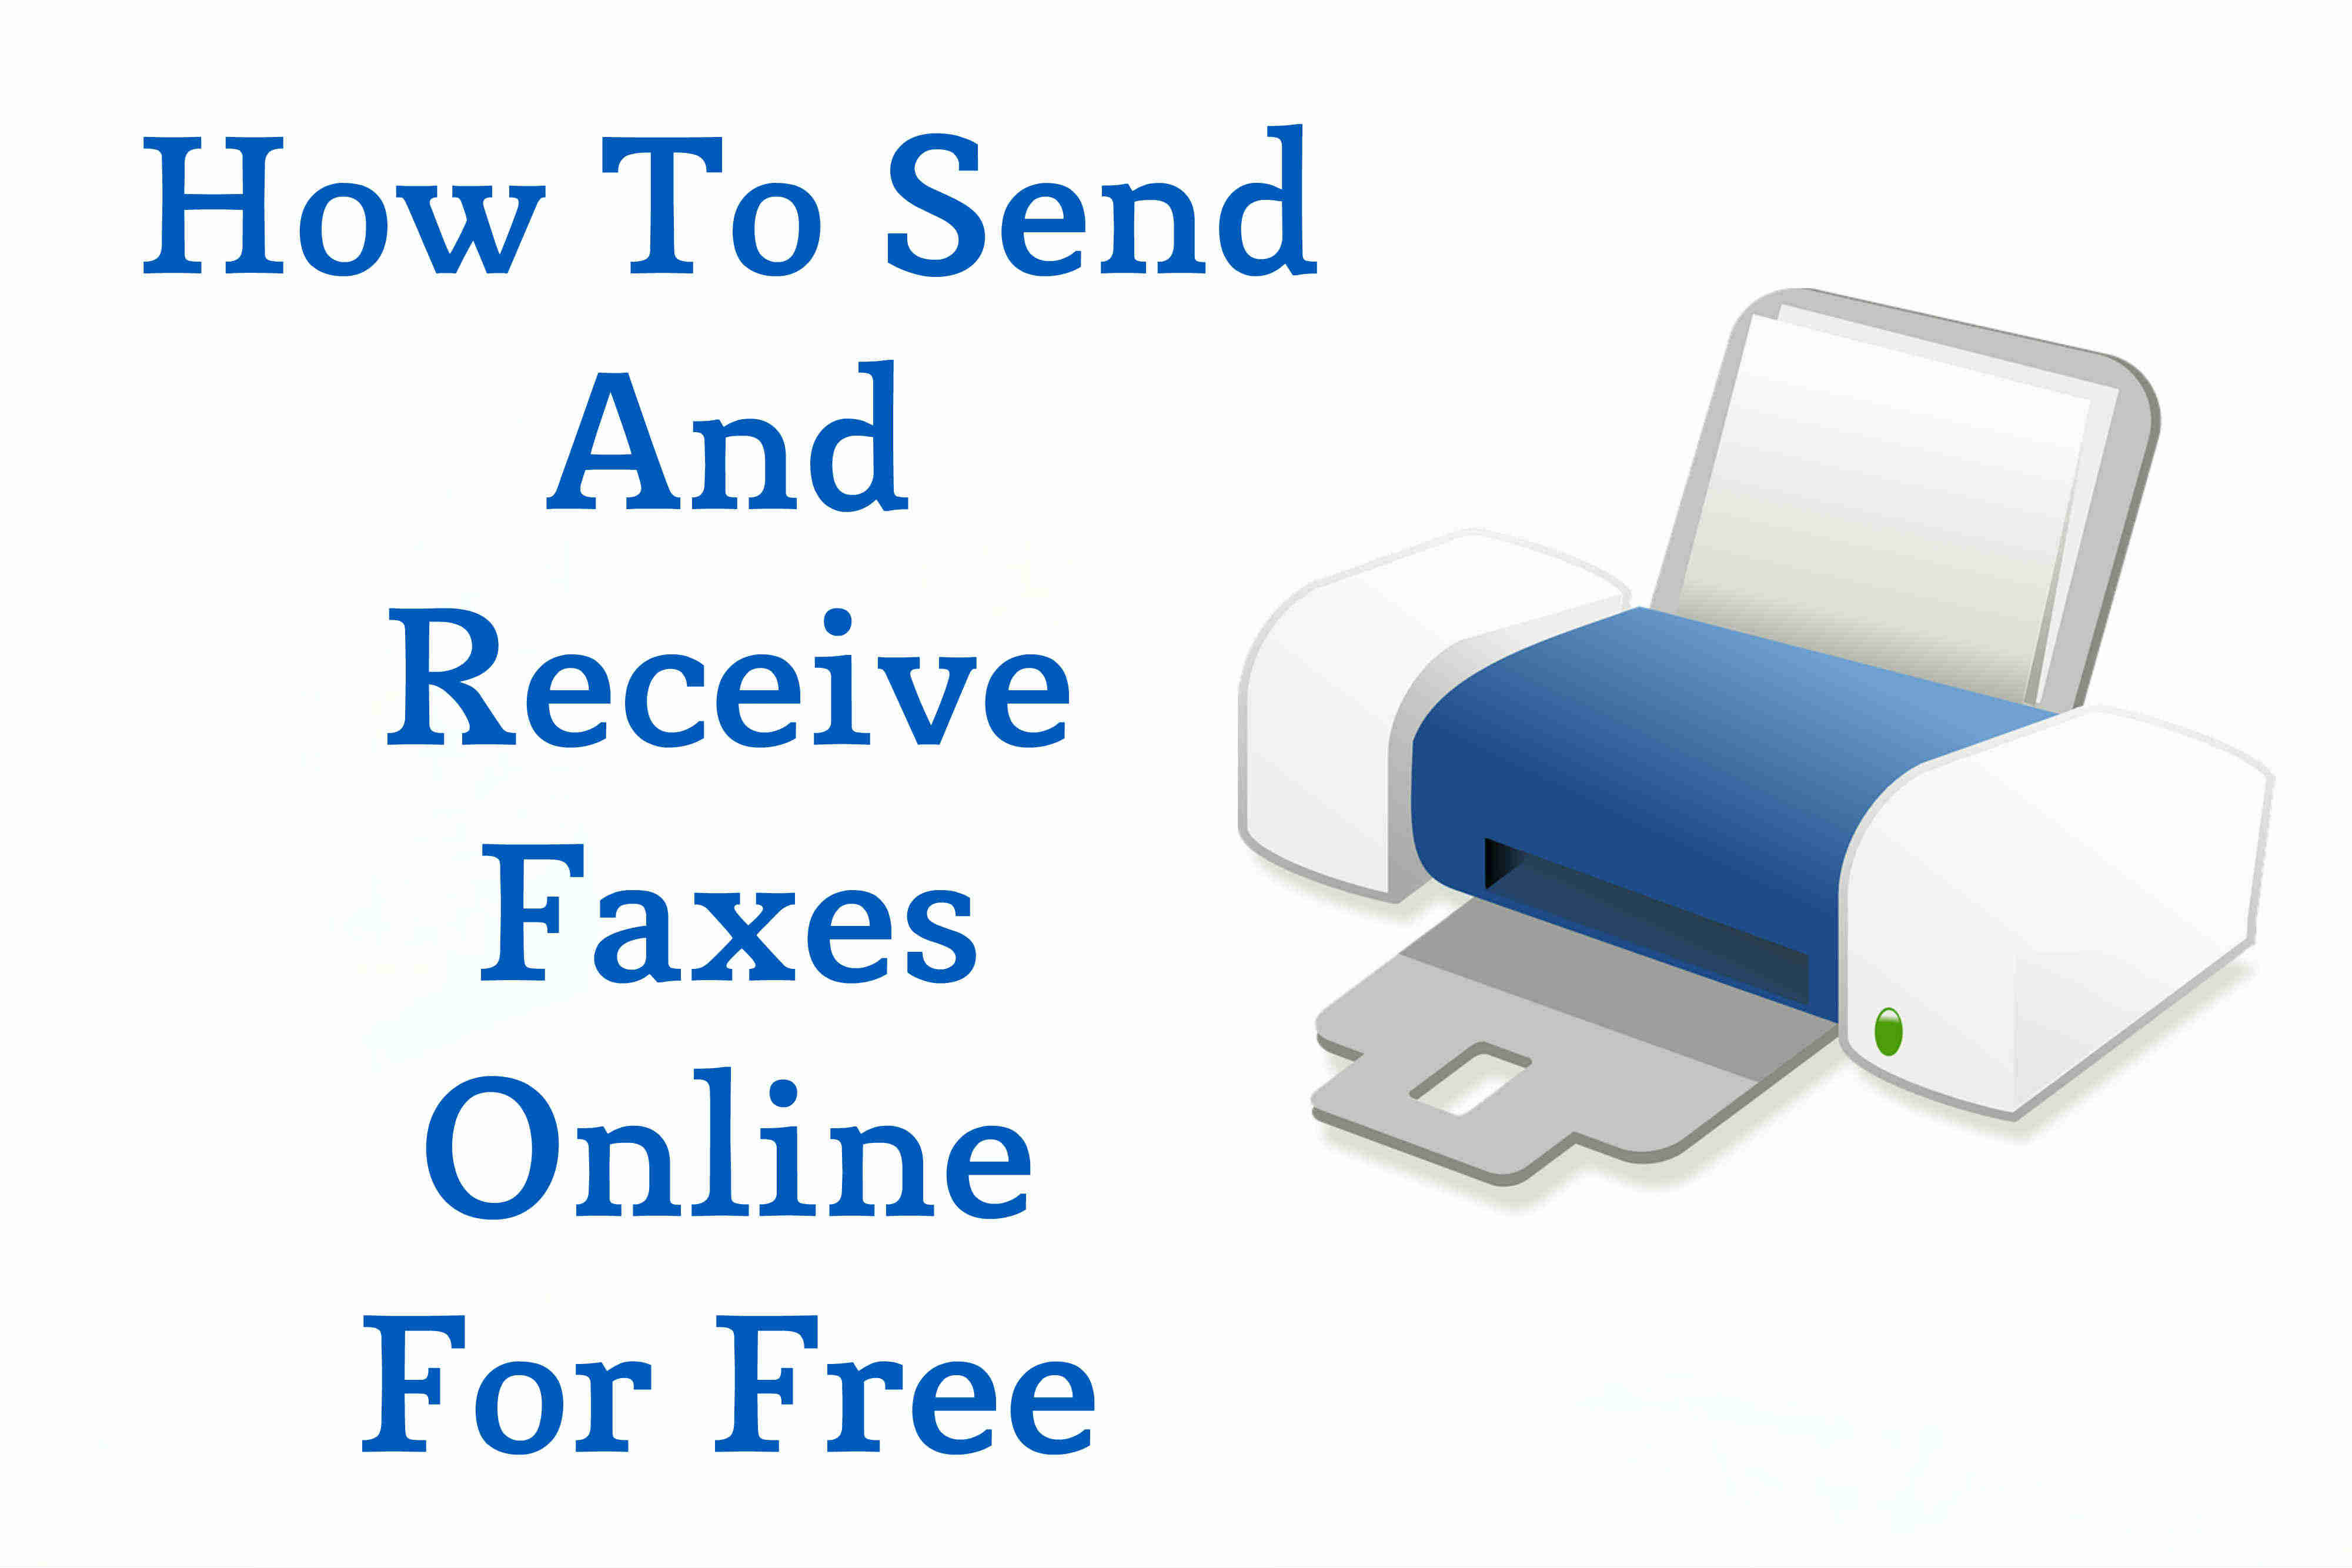 Faxes Online